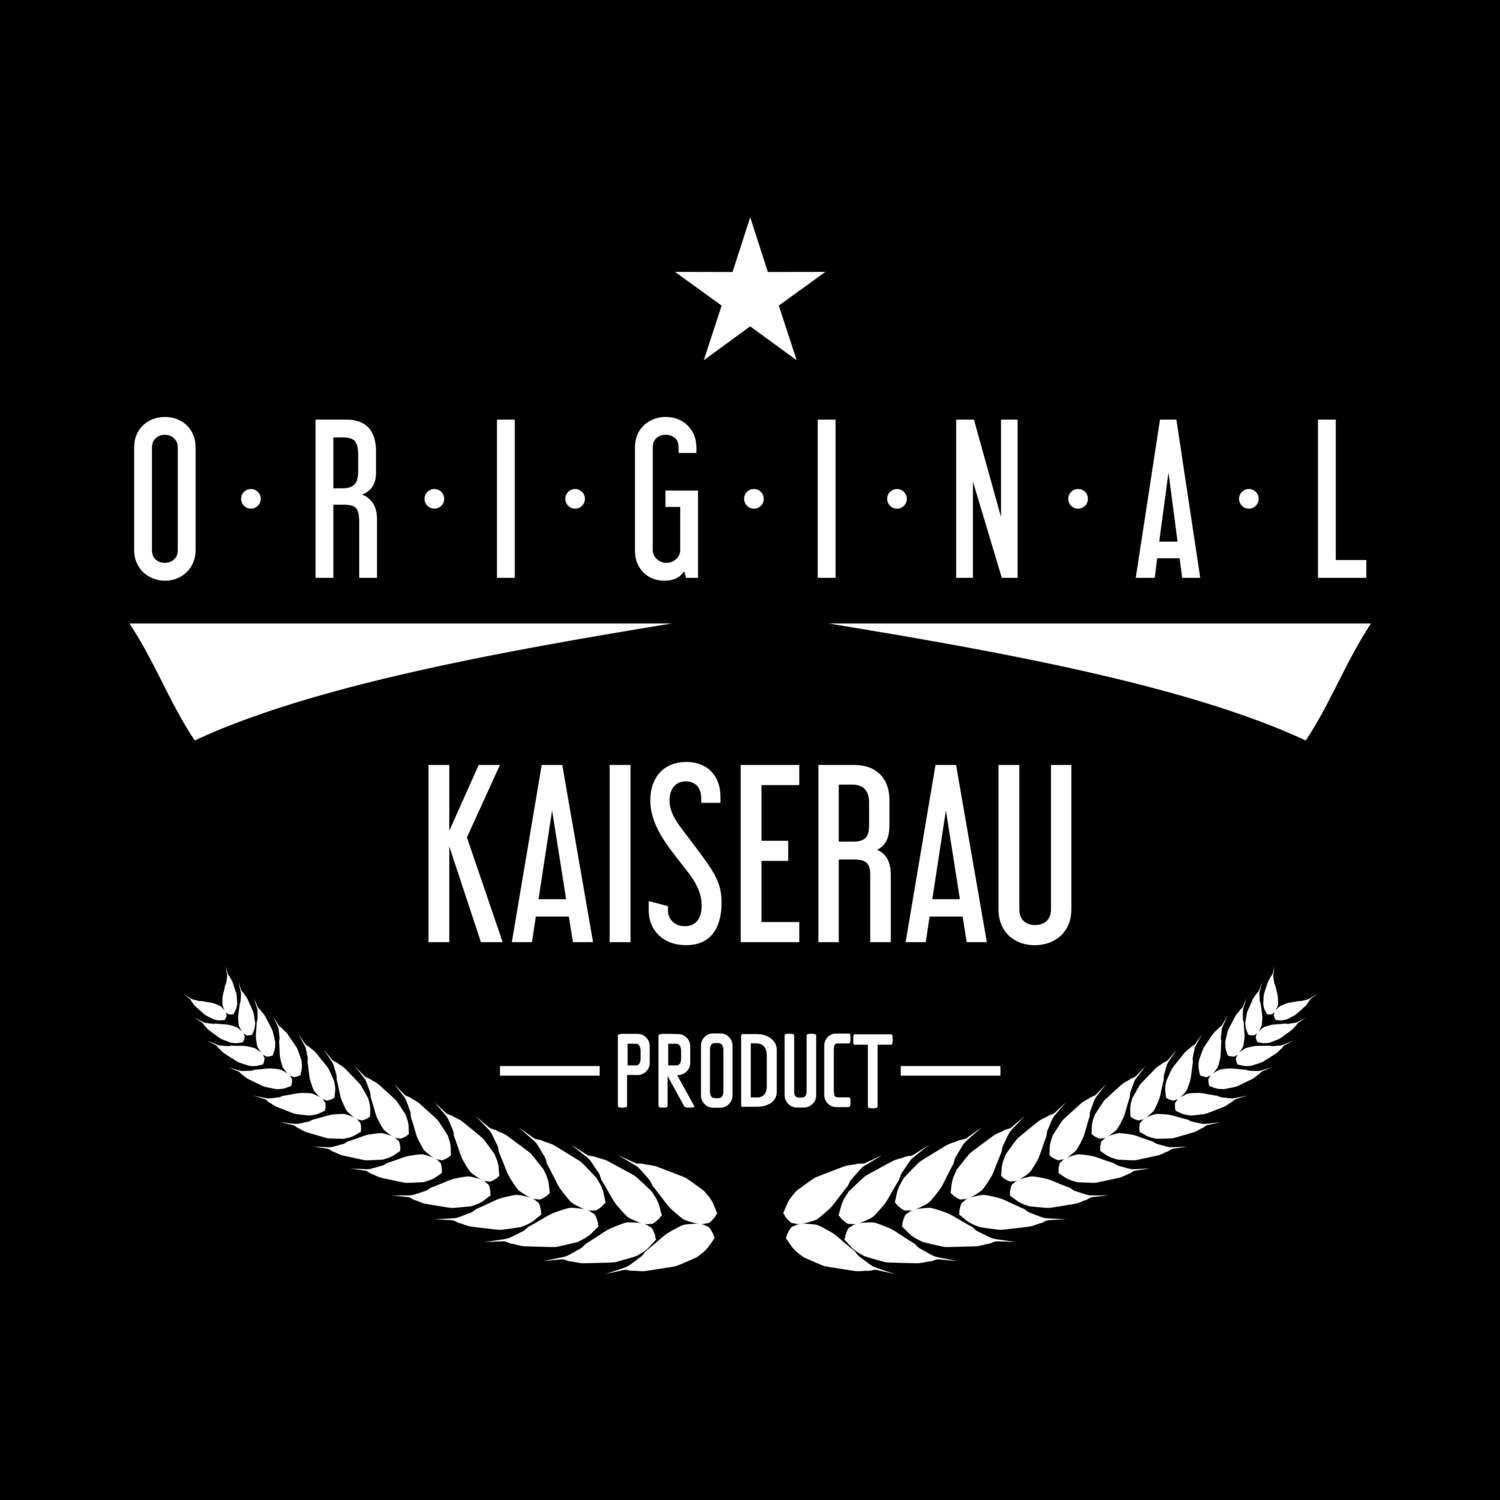 Kaiserau T-Shirt »Original Product«